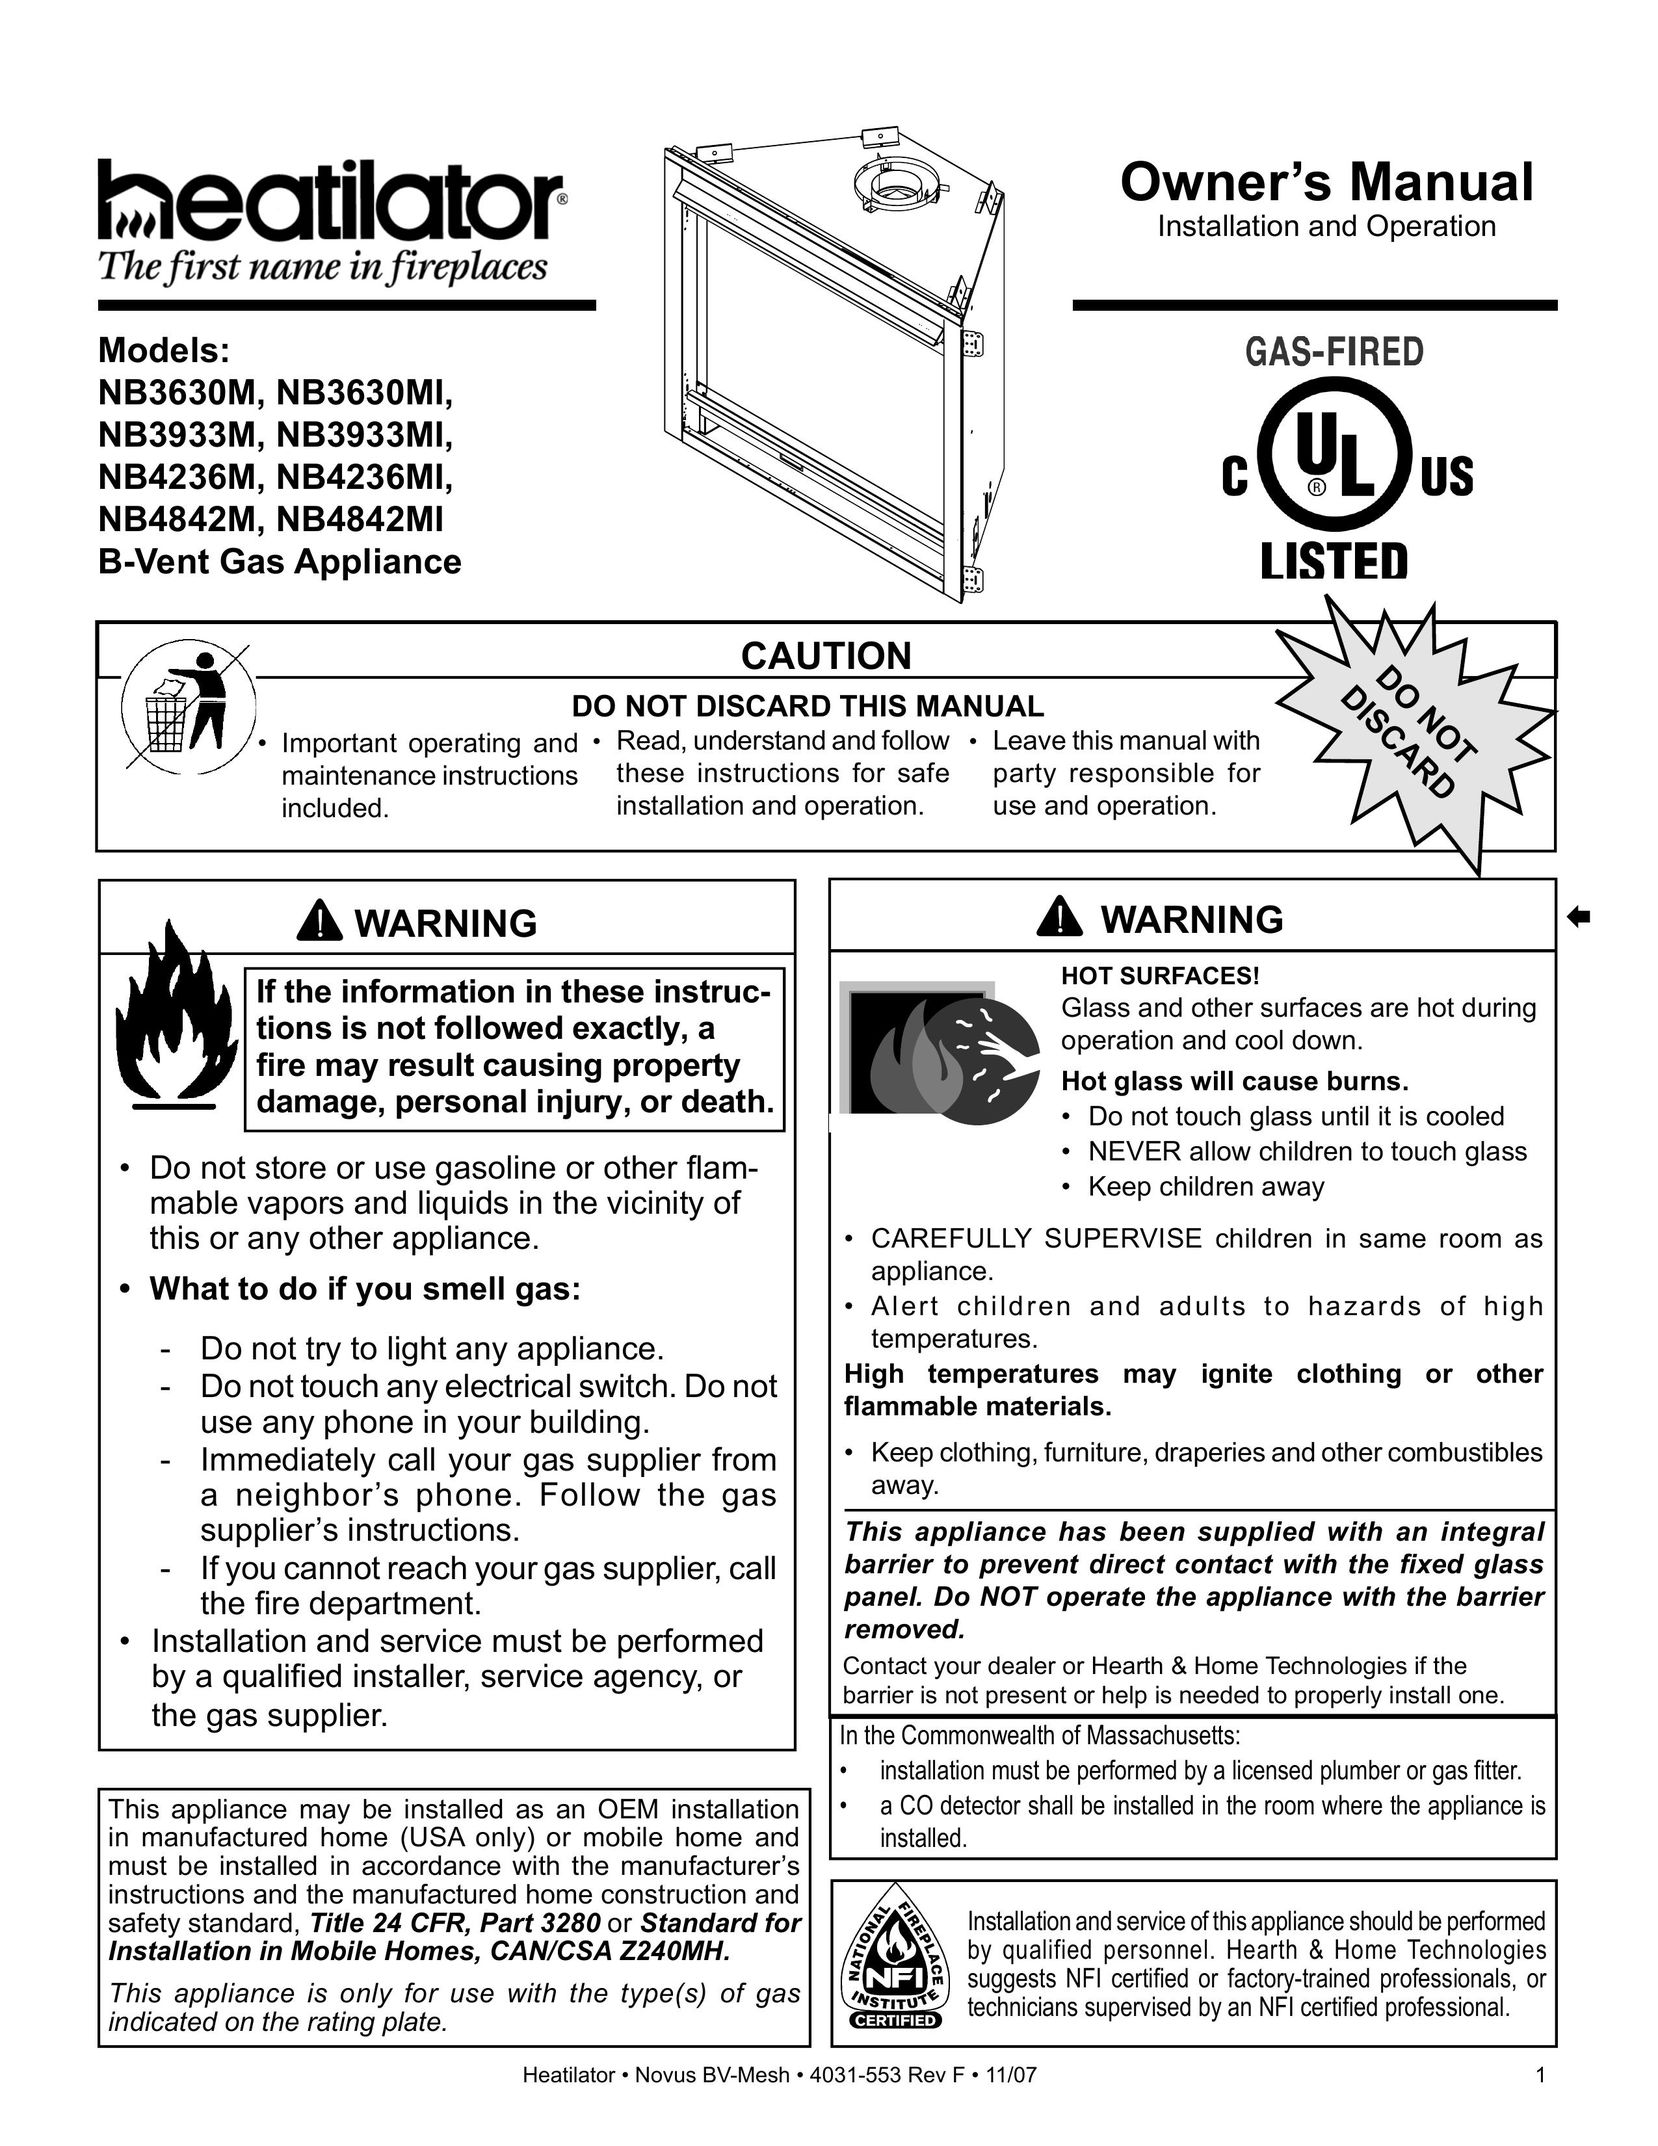 Heatiator NB3630MI Indoor Fireplace User Manual